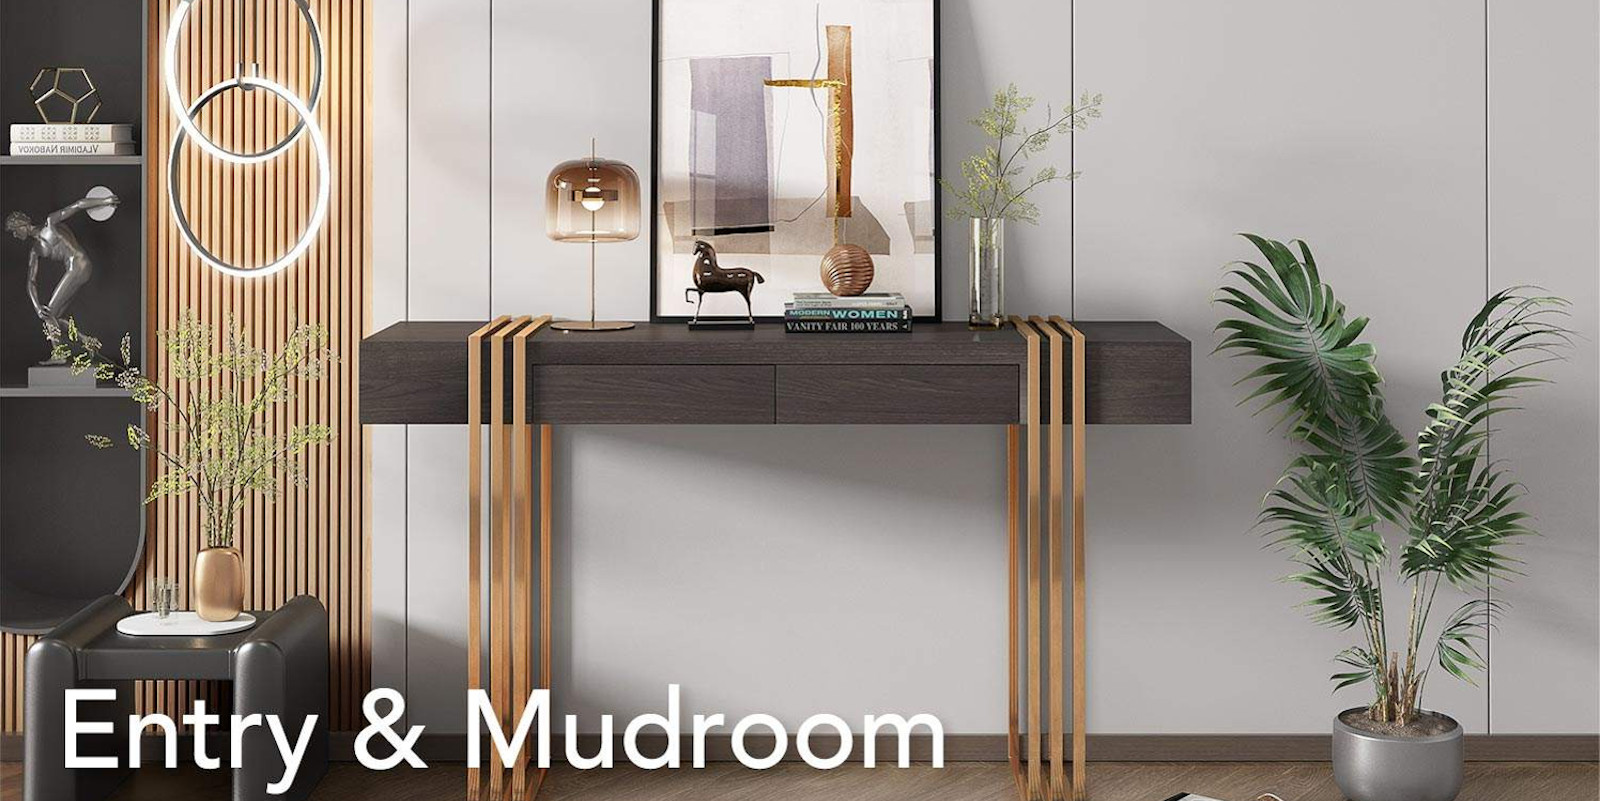 Entry mudroom furniture